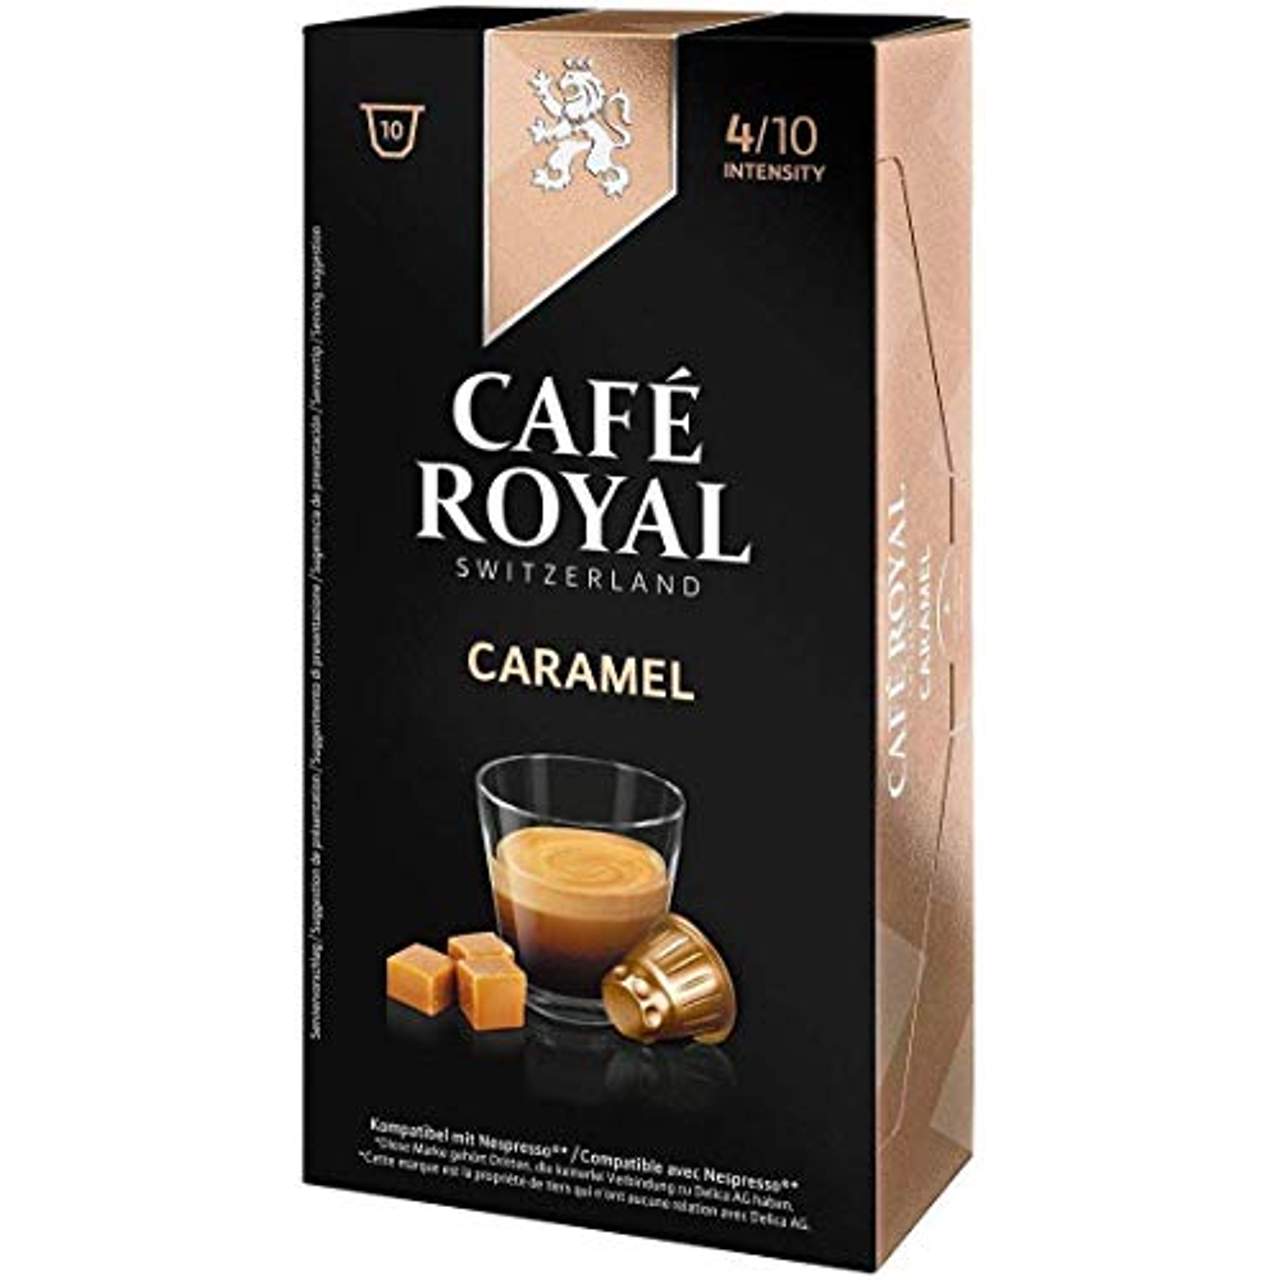 Café Royal Caramel Flavoured Edition